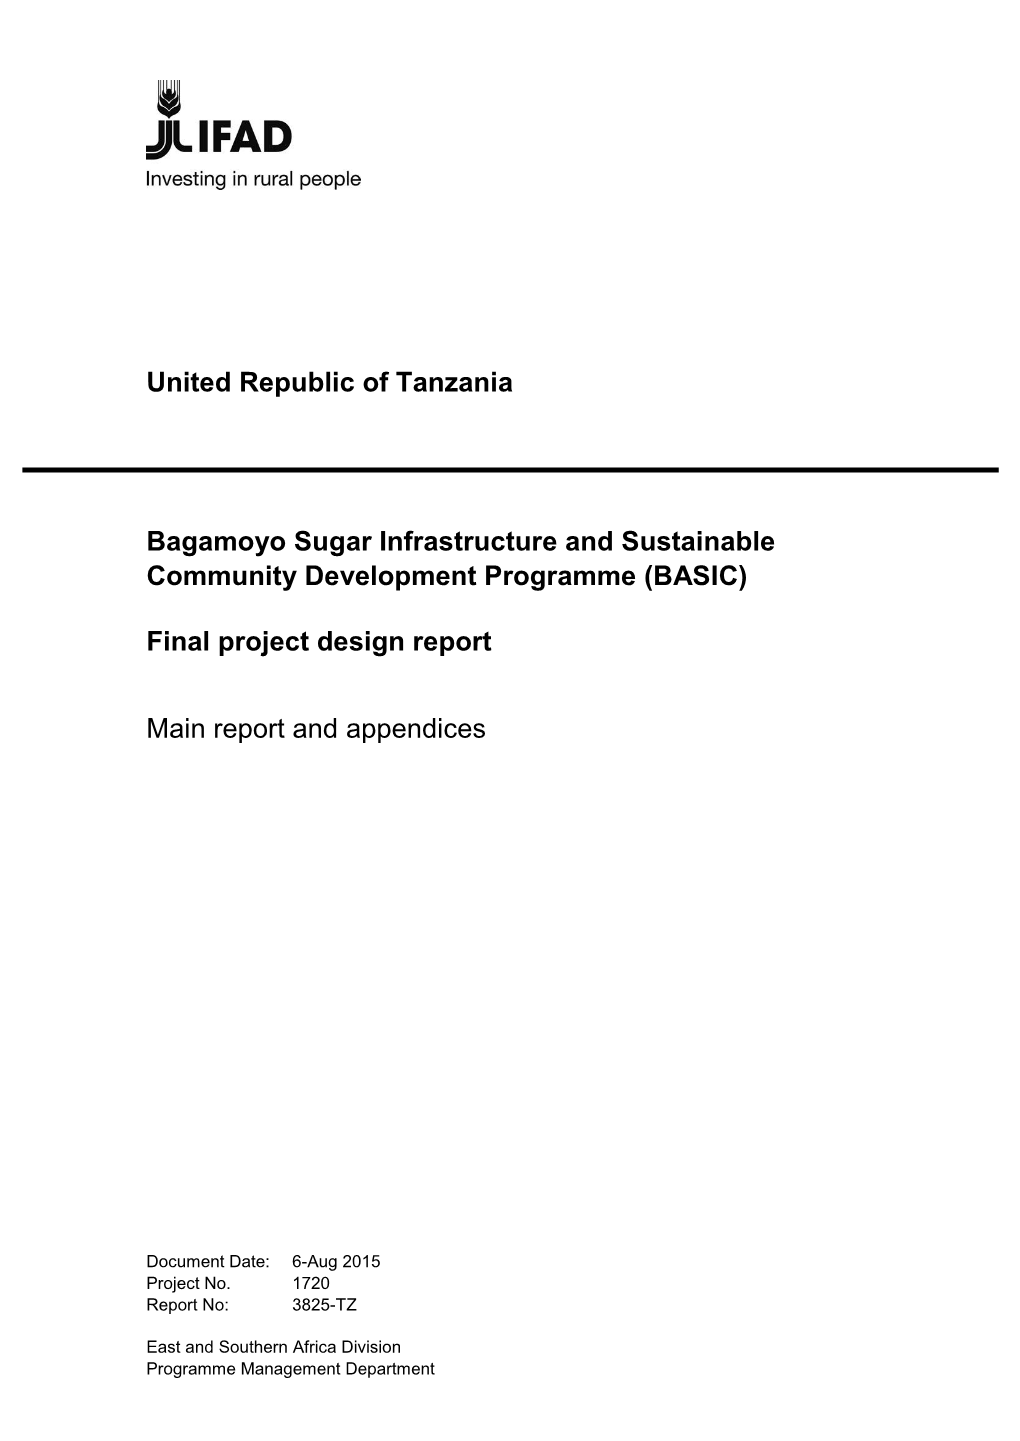 Bagamoyo Sugar Infrastructure and Sustainable Community Development Programme (BASIC)